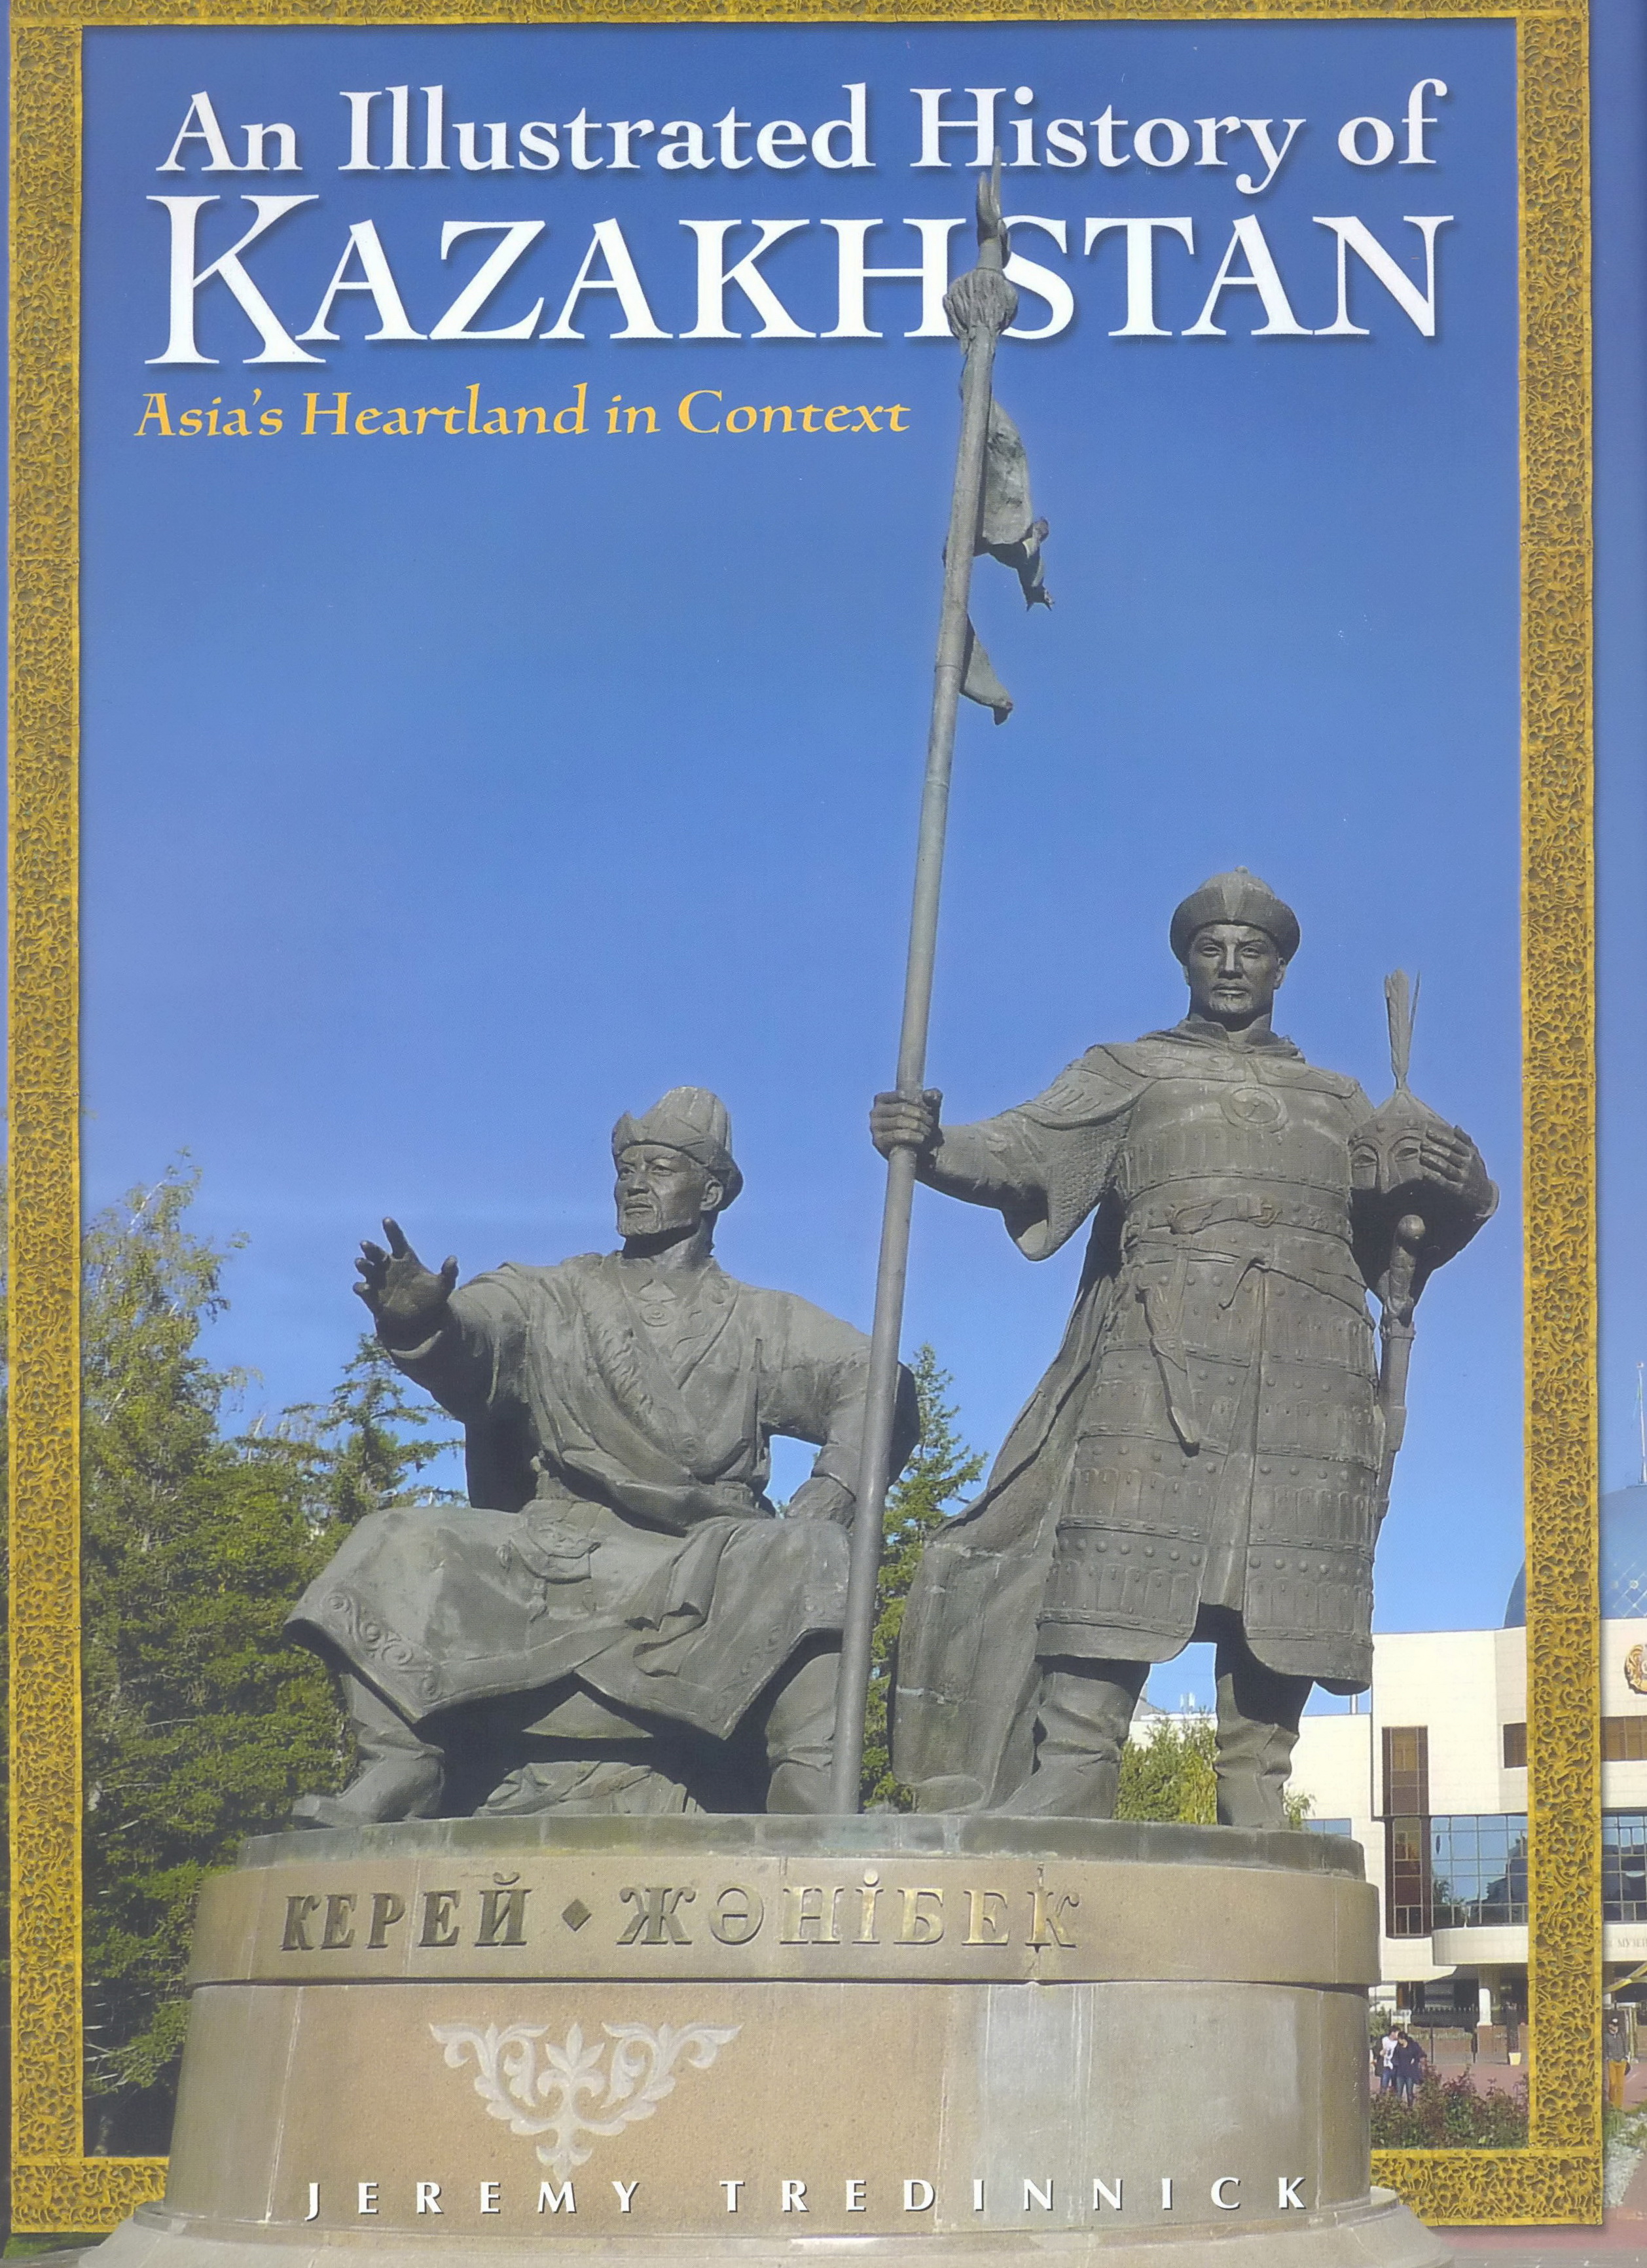 New Book Illuminates Kazakhstan’s History with Maps, Illustrations